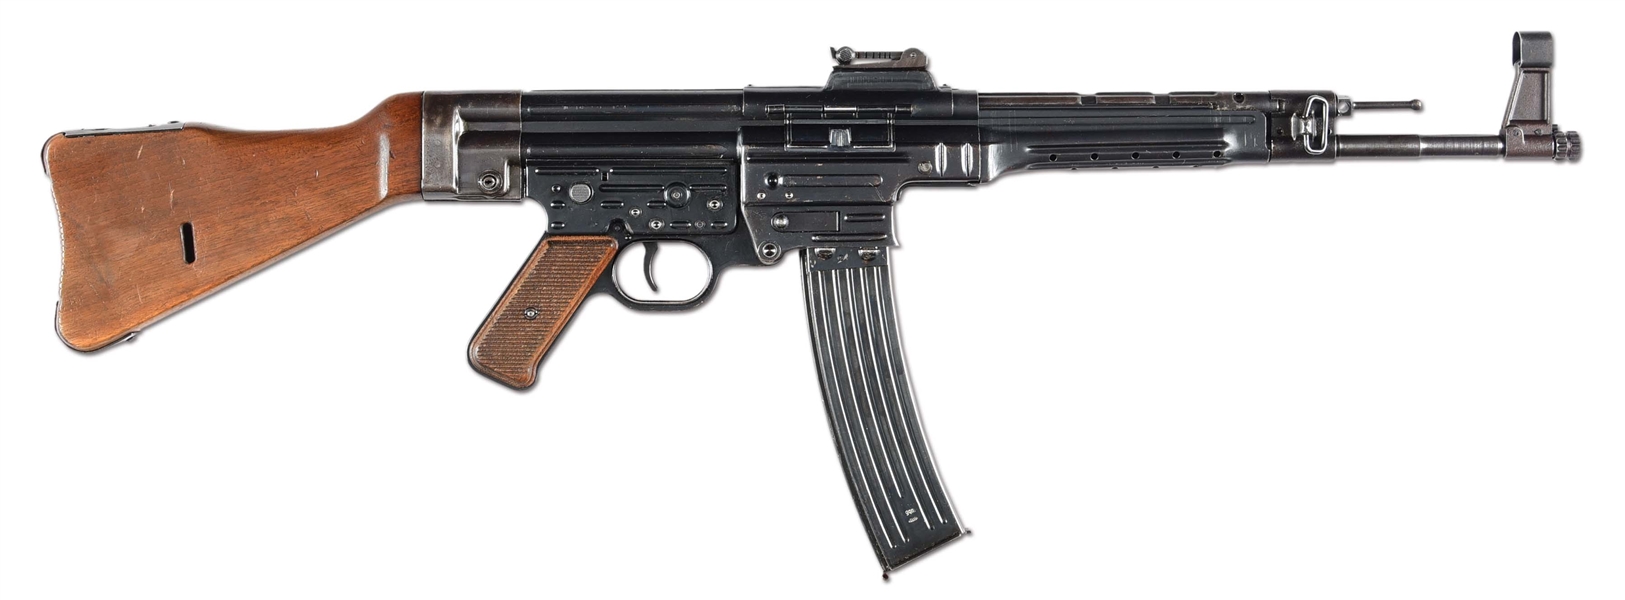 (N) EXCEPTIONAL HIGH ORIGINAL CONDITION J. P. SAUER MANUFACTURED GERMAN MP-44 MACHINE GUN (CURIO & RELIC).